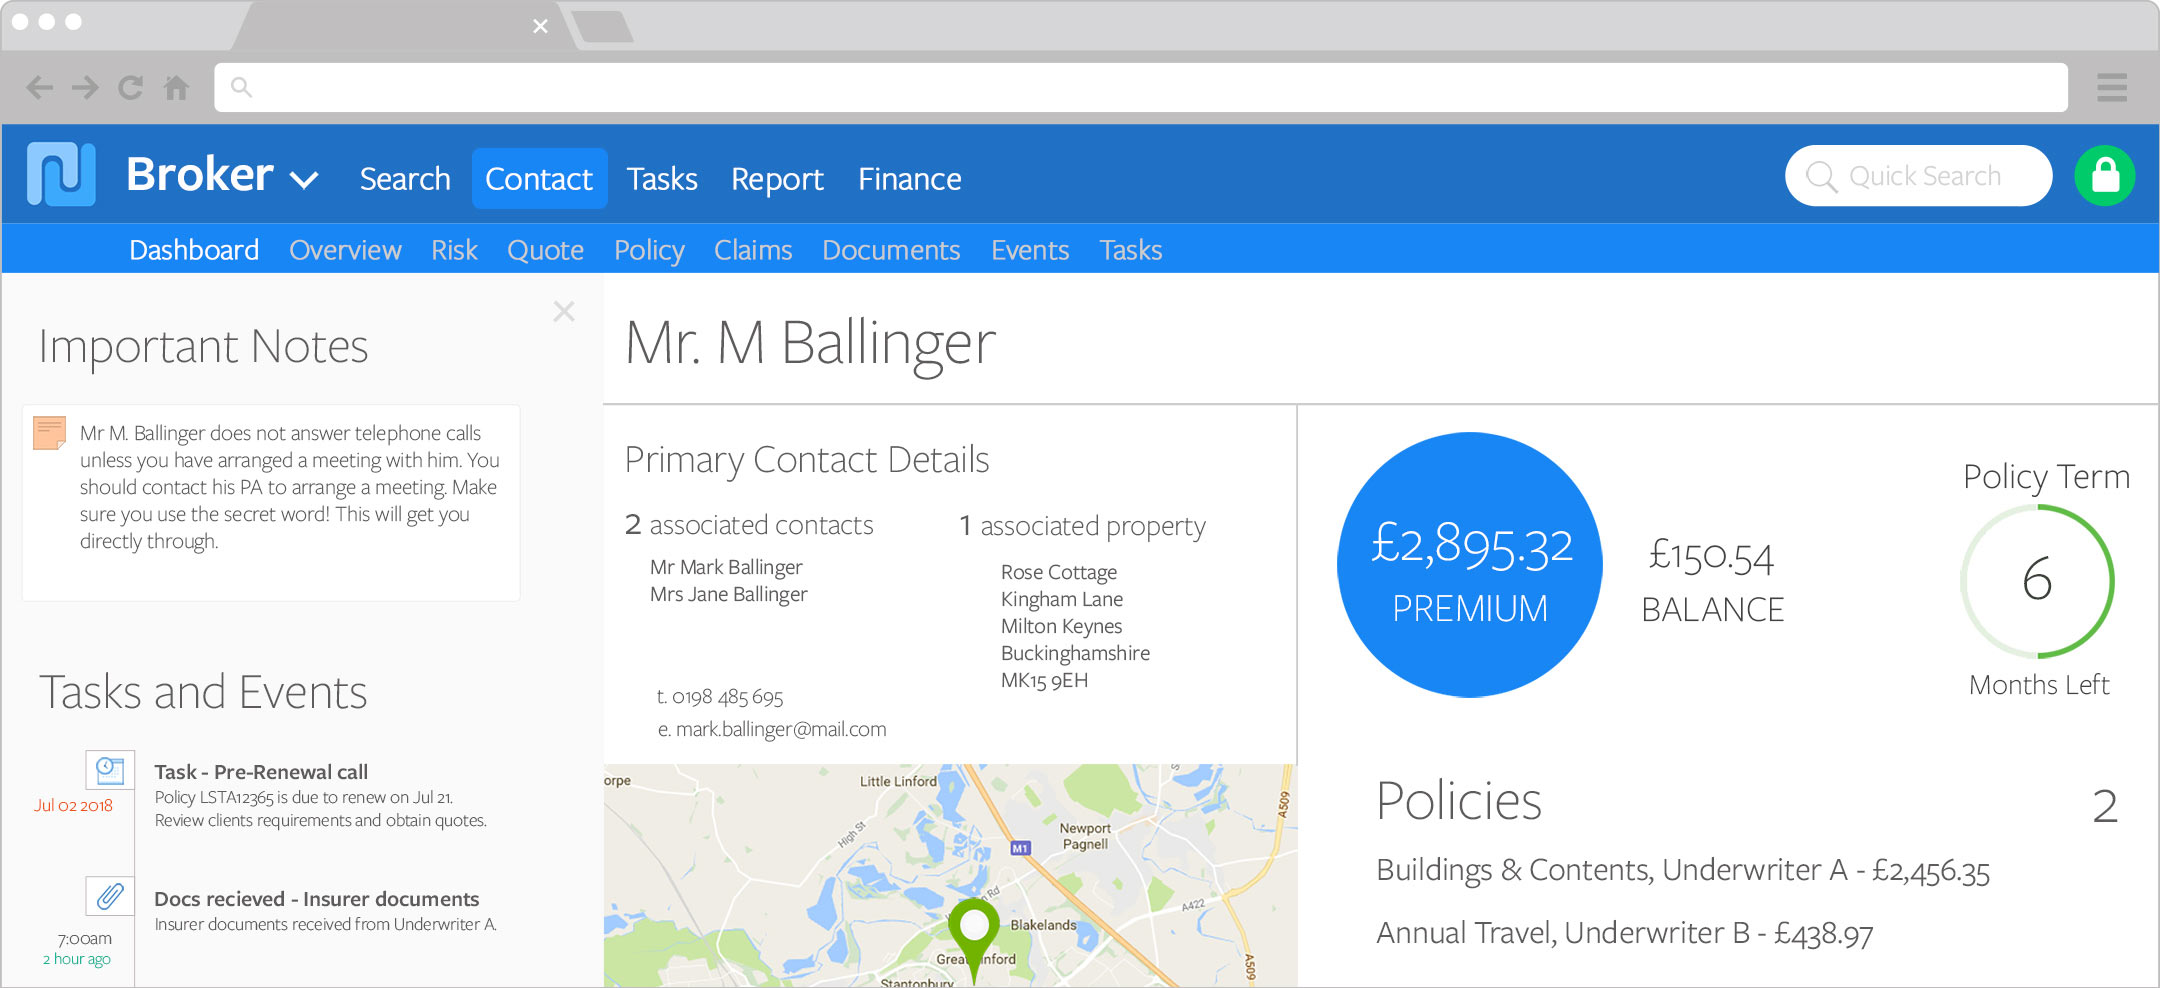 PolicyFlow's insurance broking management software client dashboard